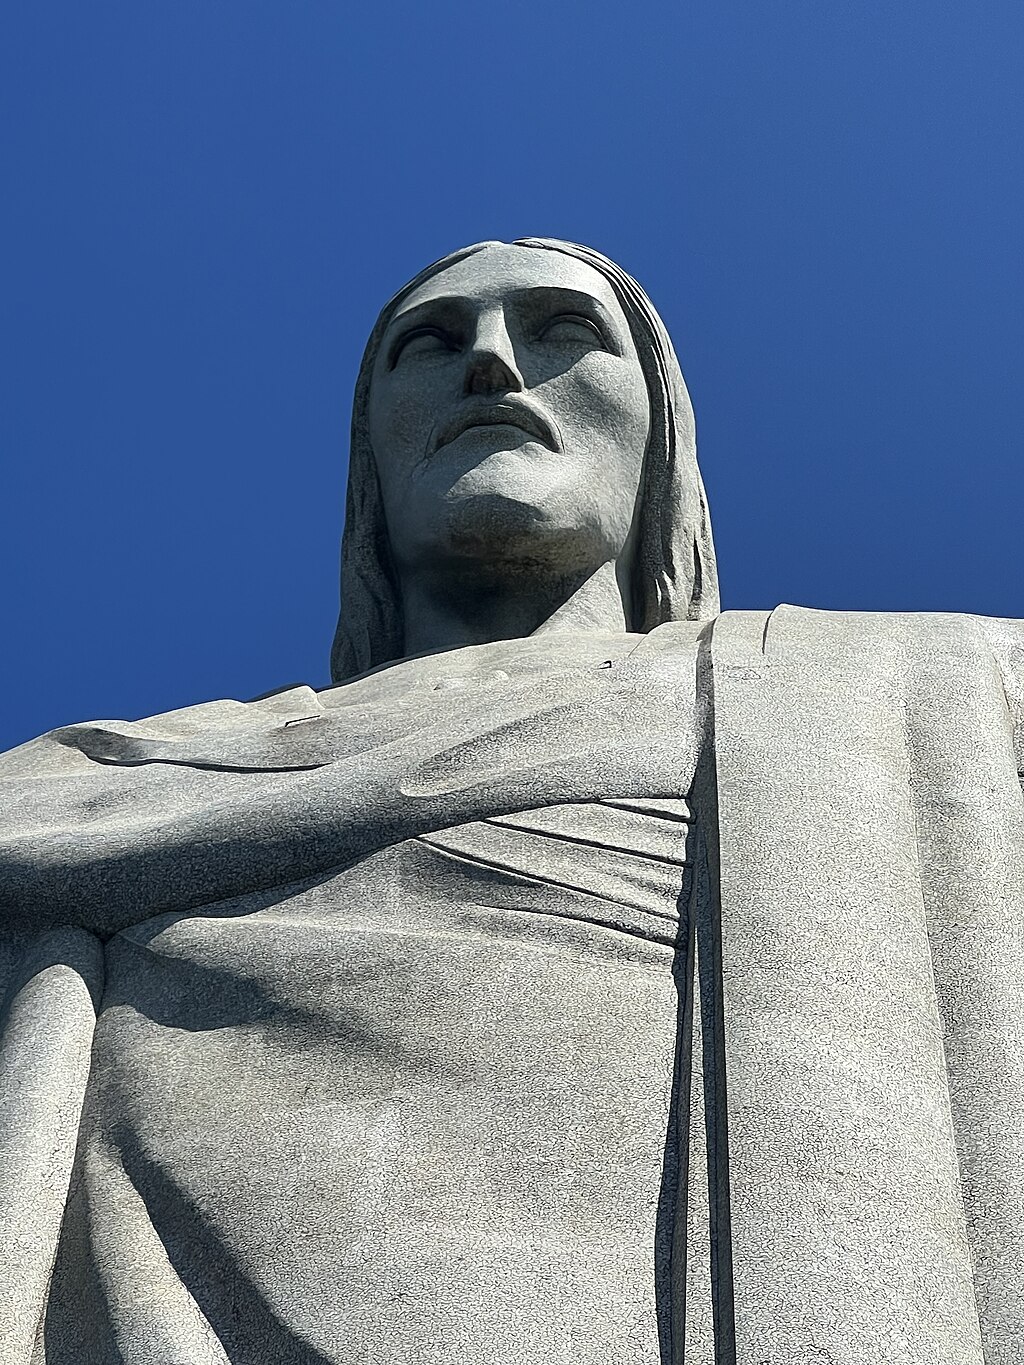 Rio’s Emblem of Faith, The Christ Statue